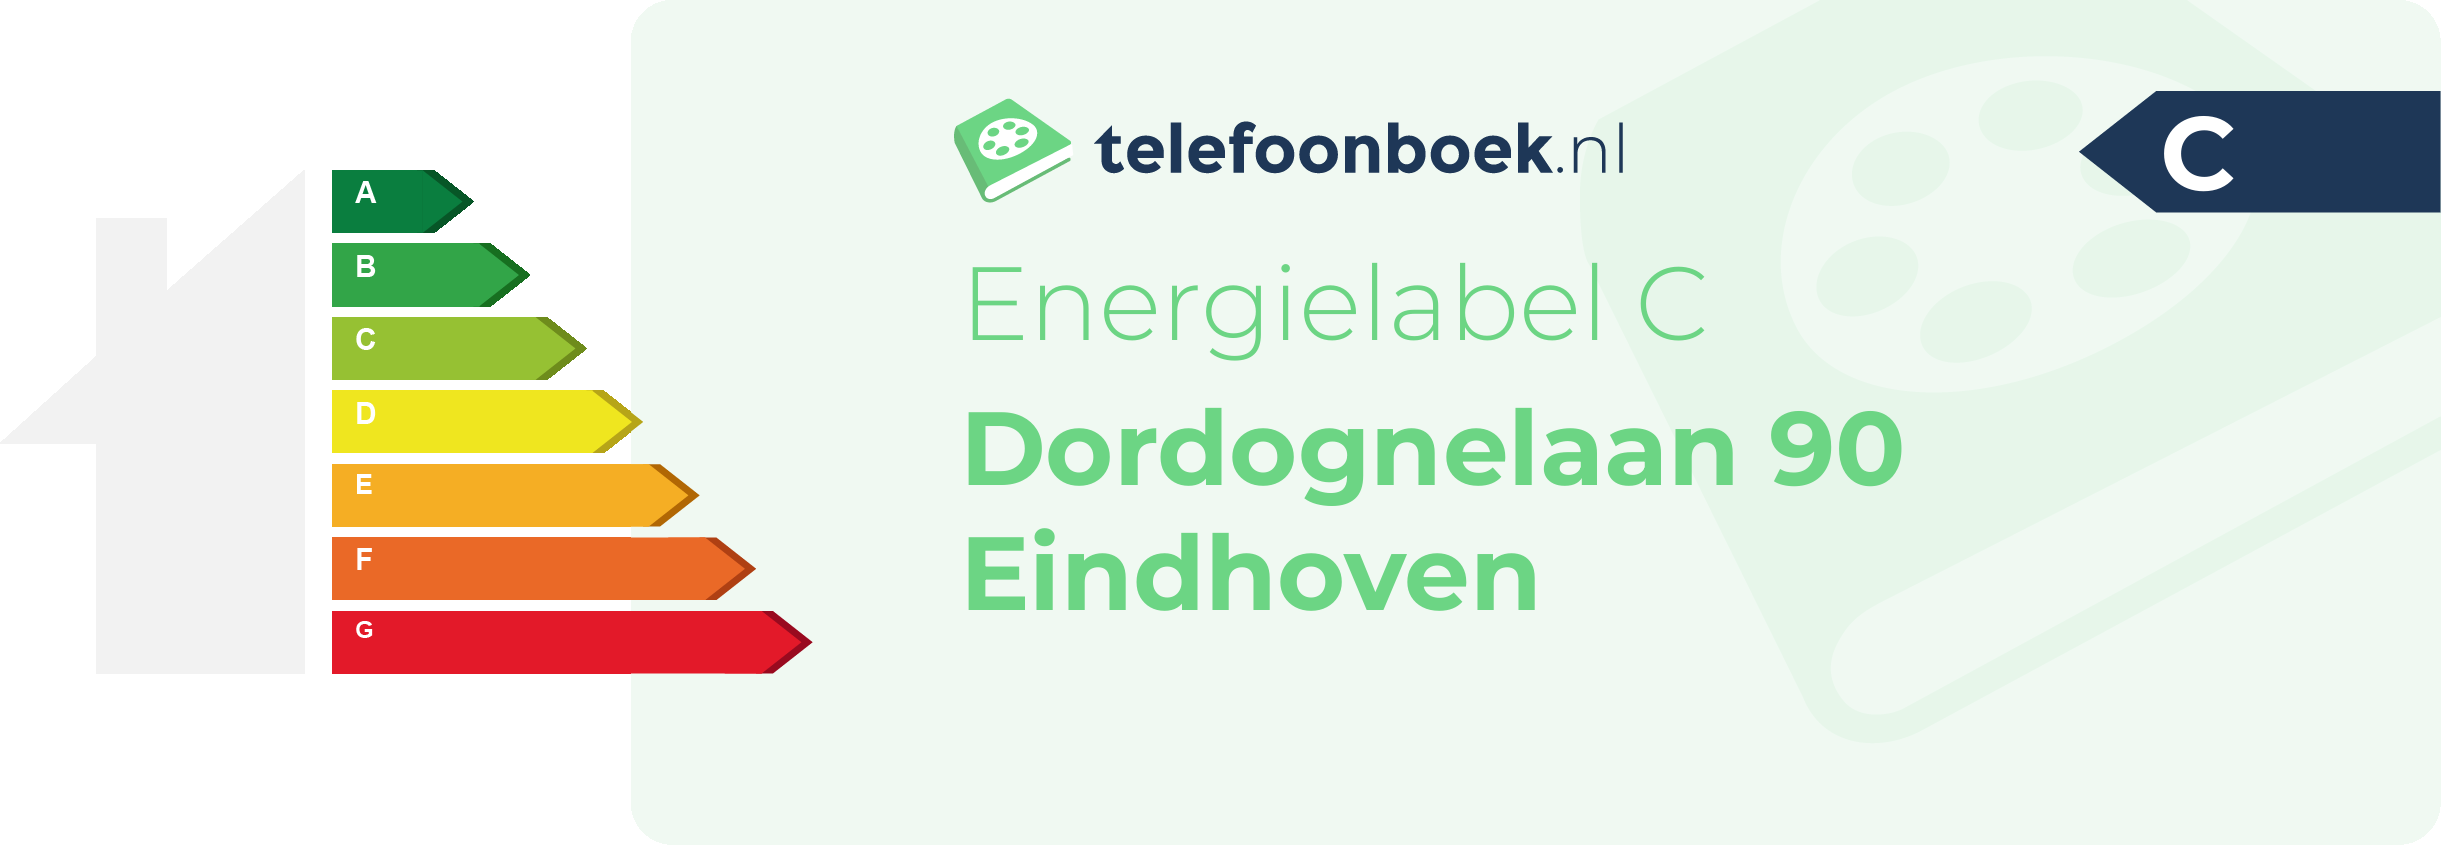 Energielabel Dordognelaan 90 Eindhoven